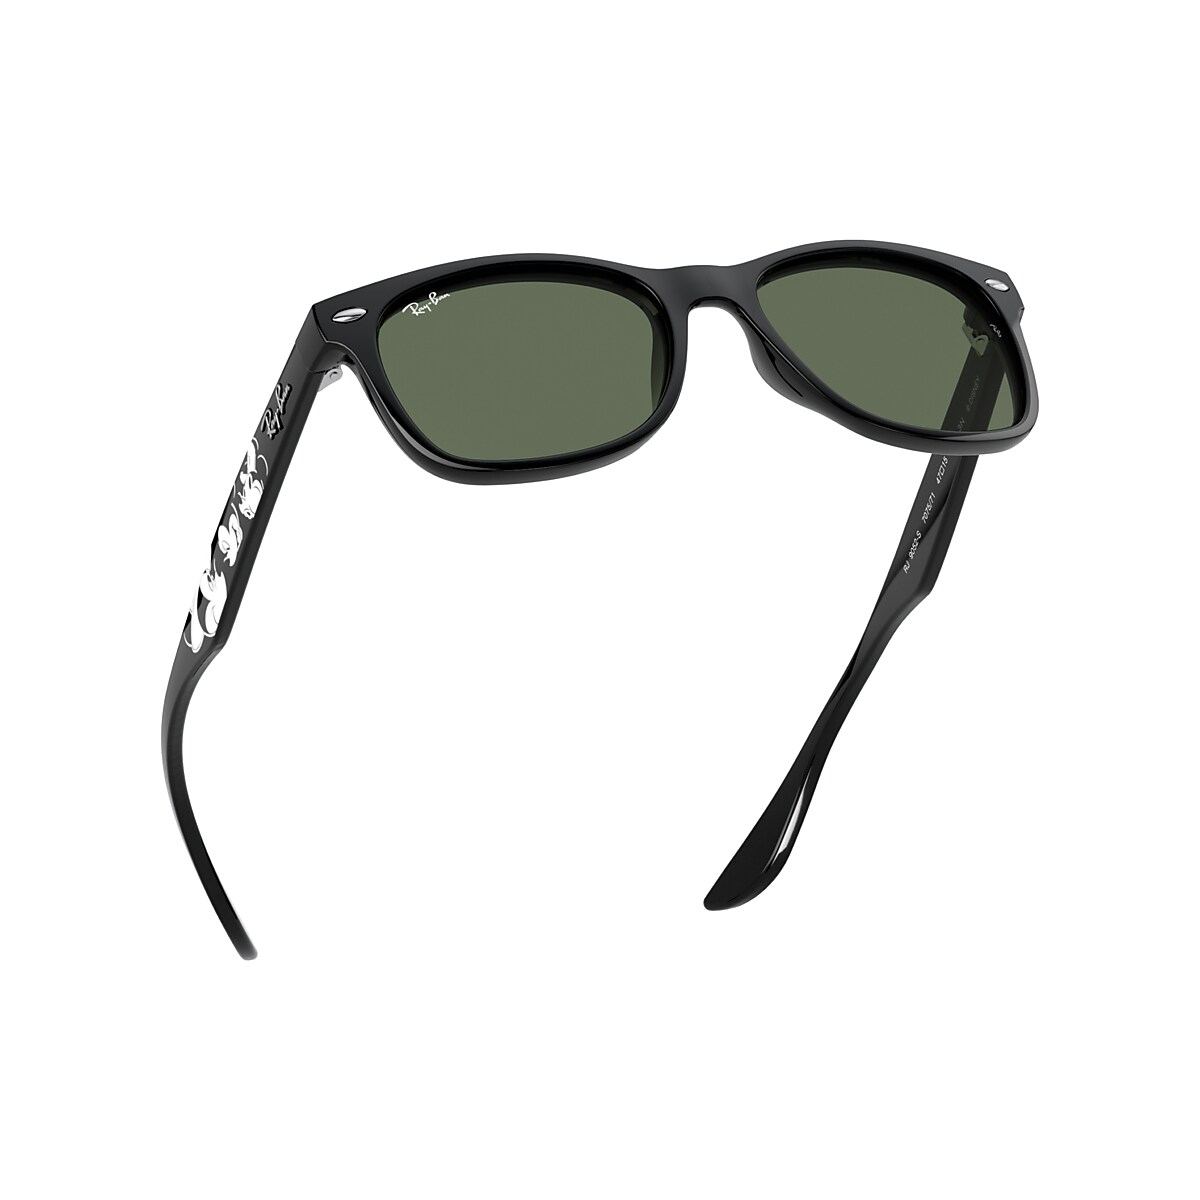 New Wayfarer Kids Sunglasses in Black and Green | Ray-Ban®